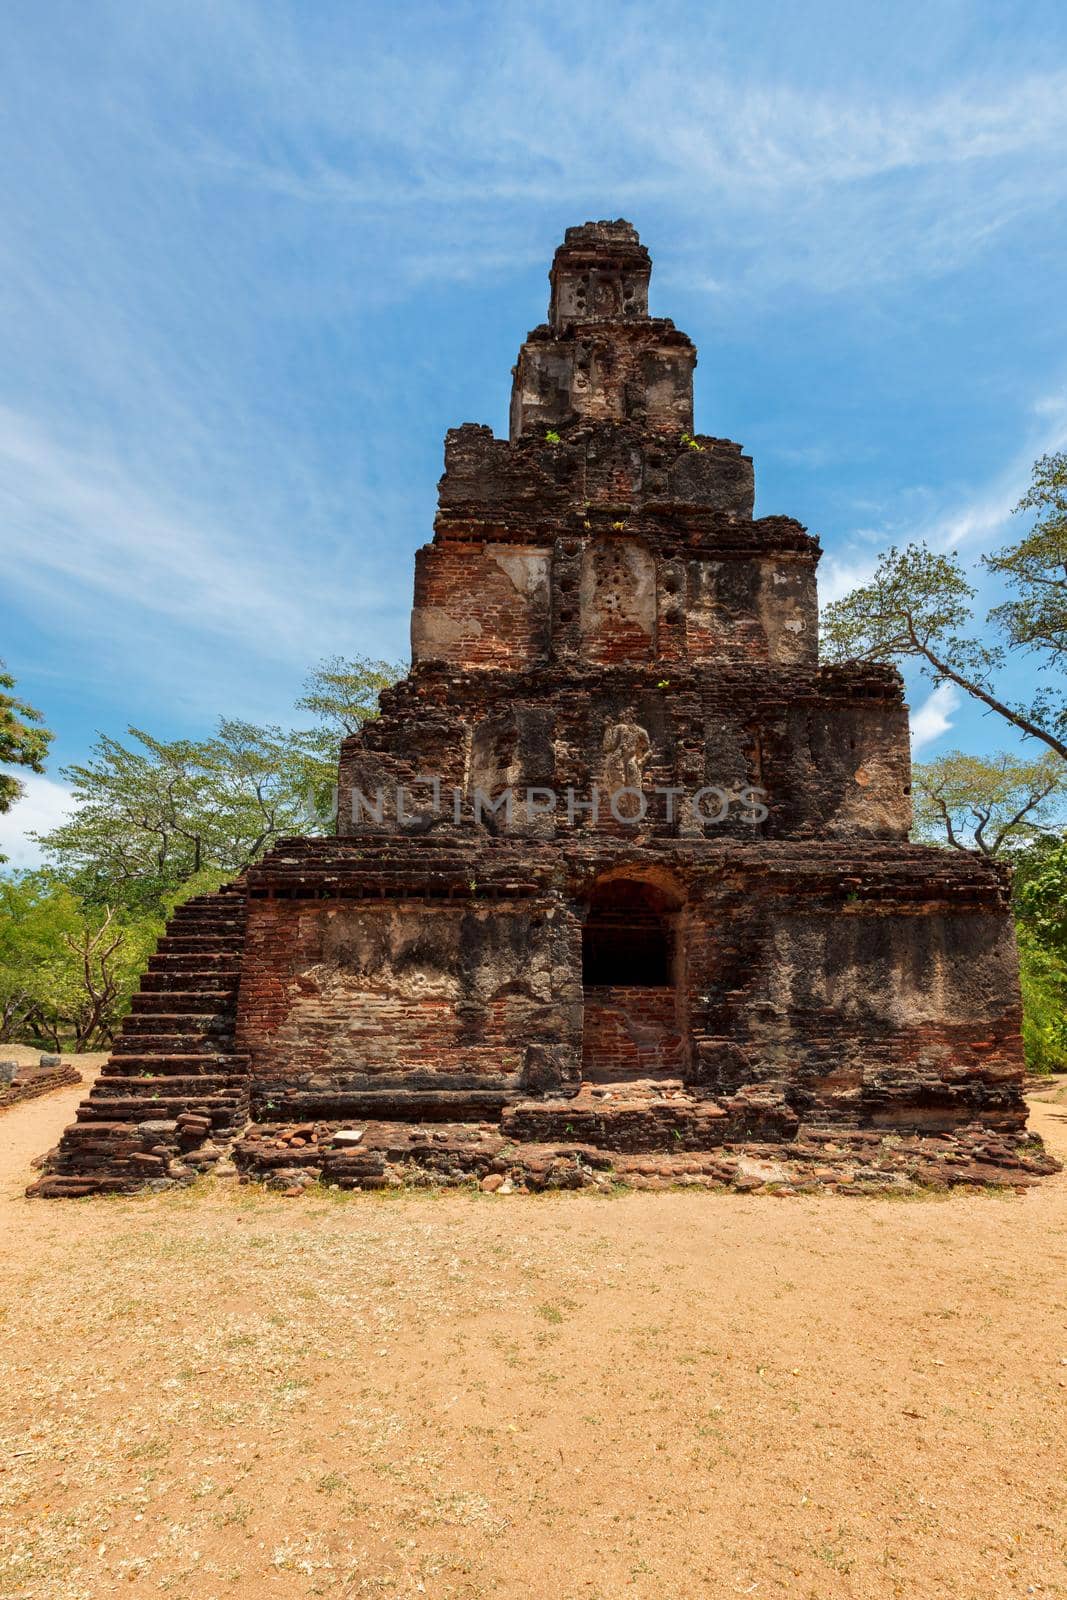 Satmahal Prasada tower 12th century step pyramid in Quadrangle, Polonnaruwa - famous tourist destination and archaelogical site, Sri Lanka